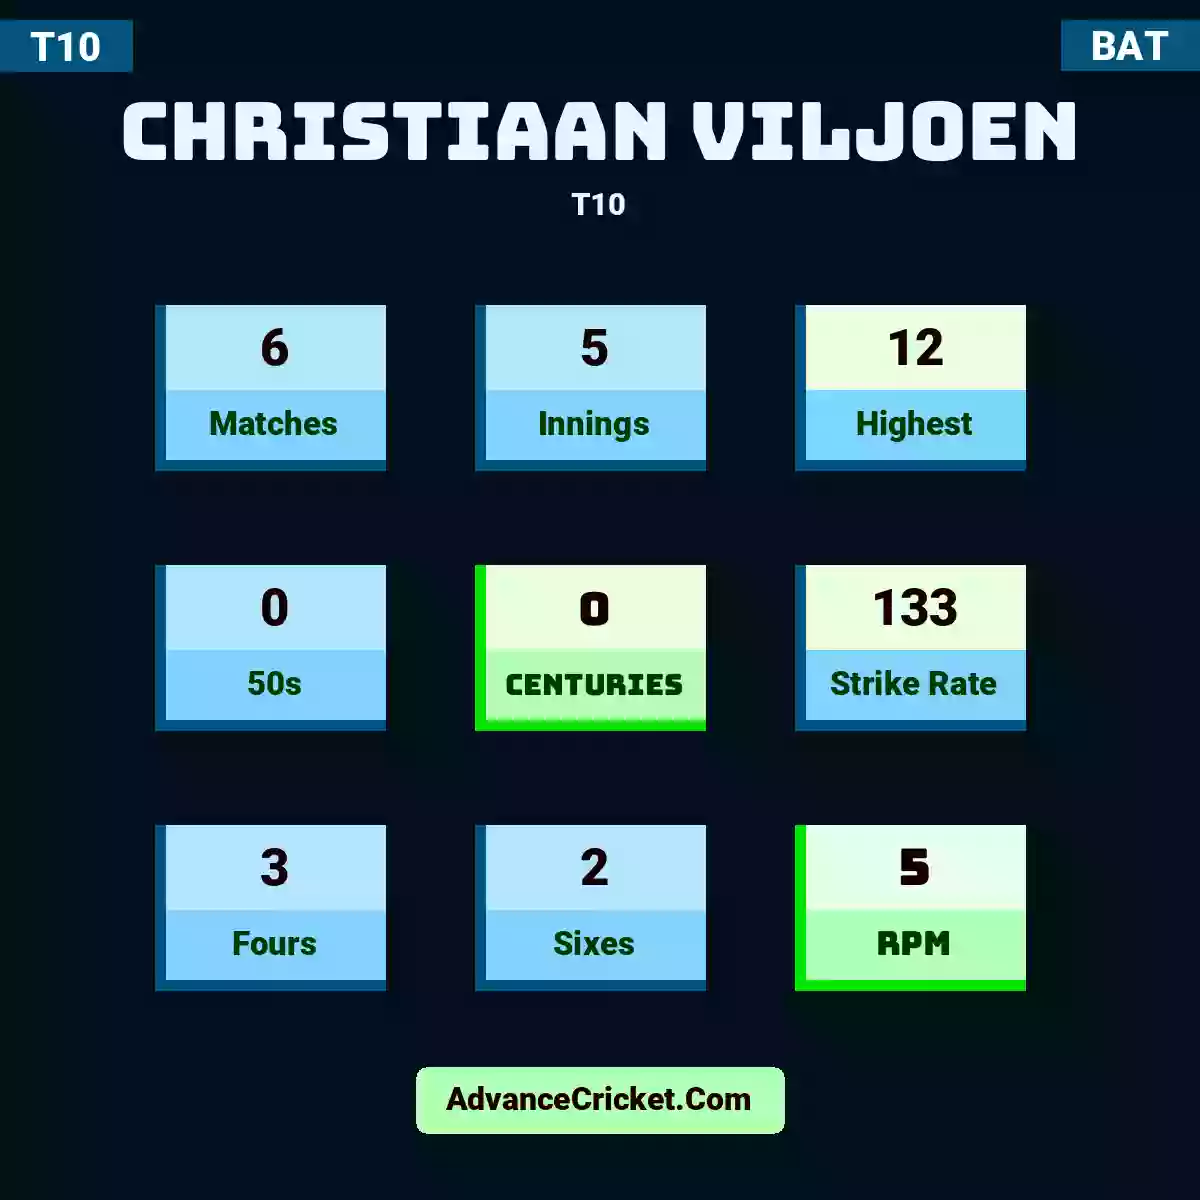 Christiaan Viljoen T10 , Christiaan Viljoen played 6 matches, scored 12 runs as highest, 0 half-centuries, and 0 centuries, with a strike rate of 133. C.Viljoen hit 3 fours and 2 sixes, with an RPM of 5.